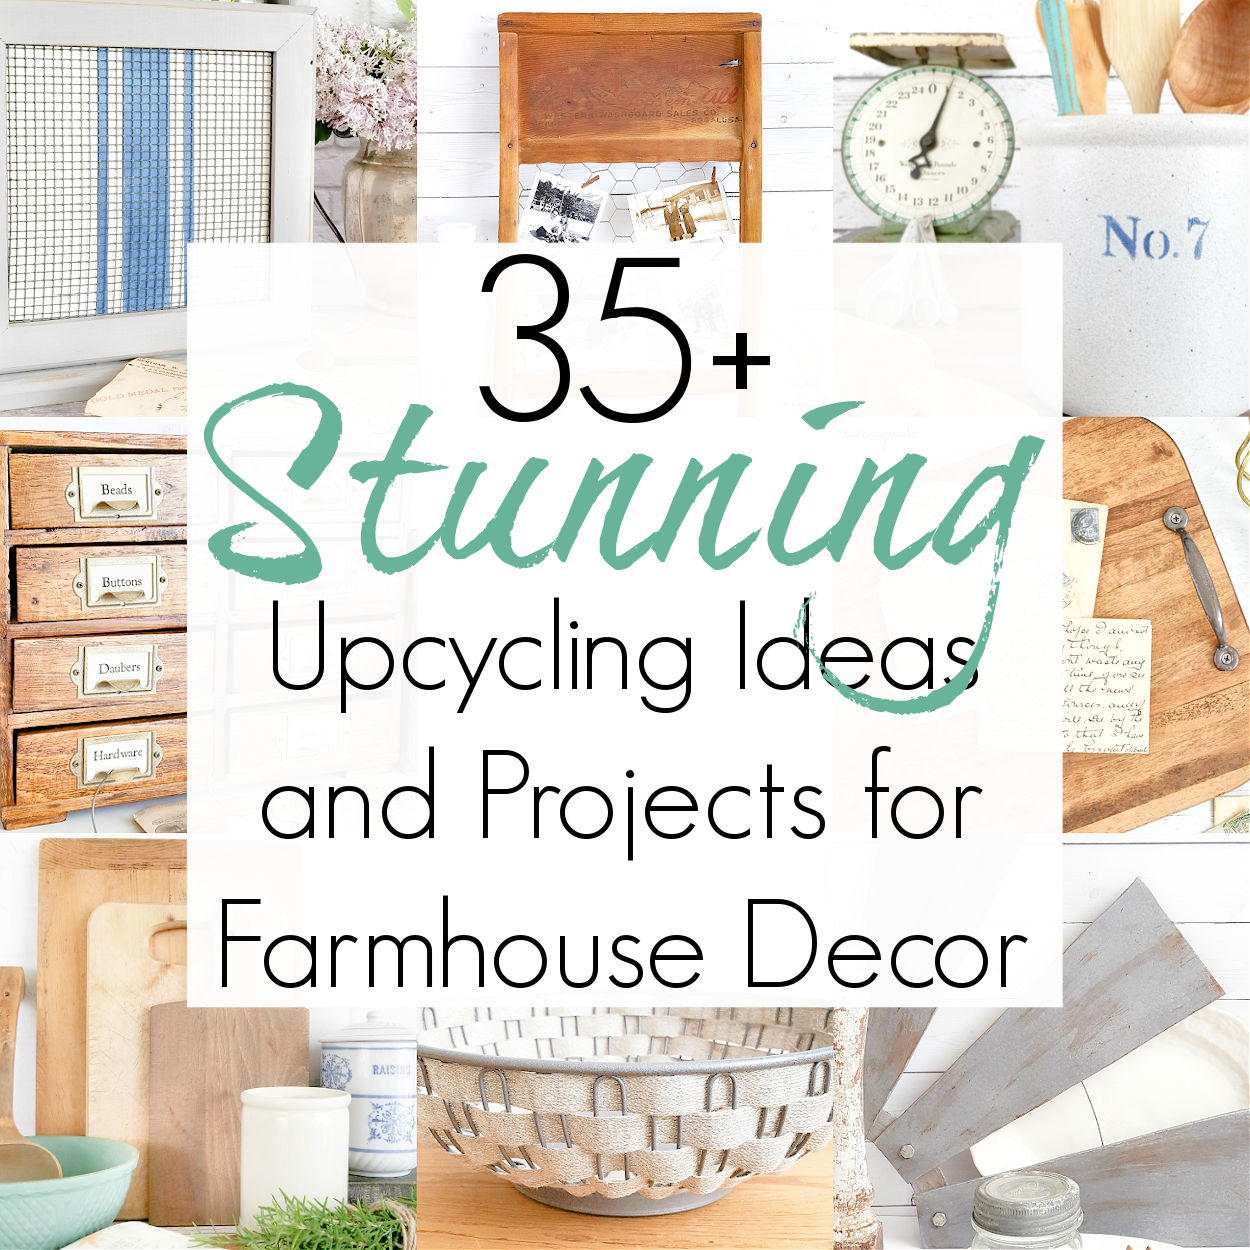 35+ Upcycling Ideas for Farmhouse Decor on a Budget